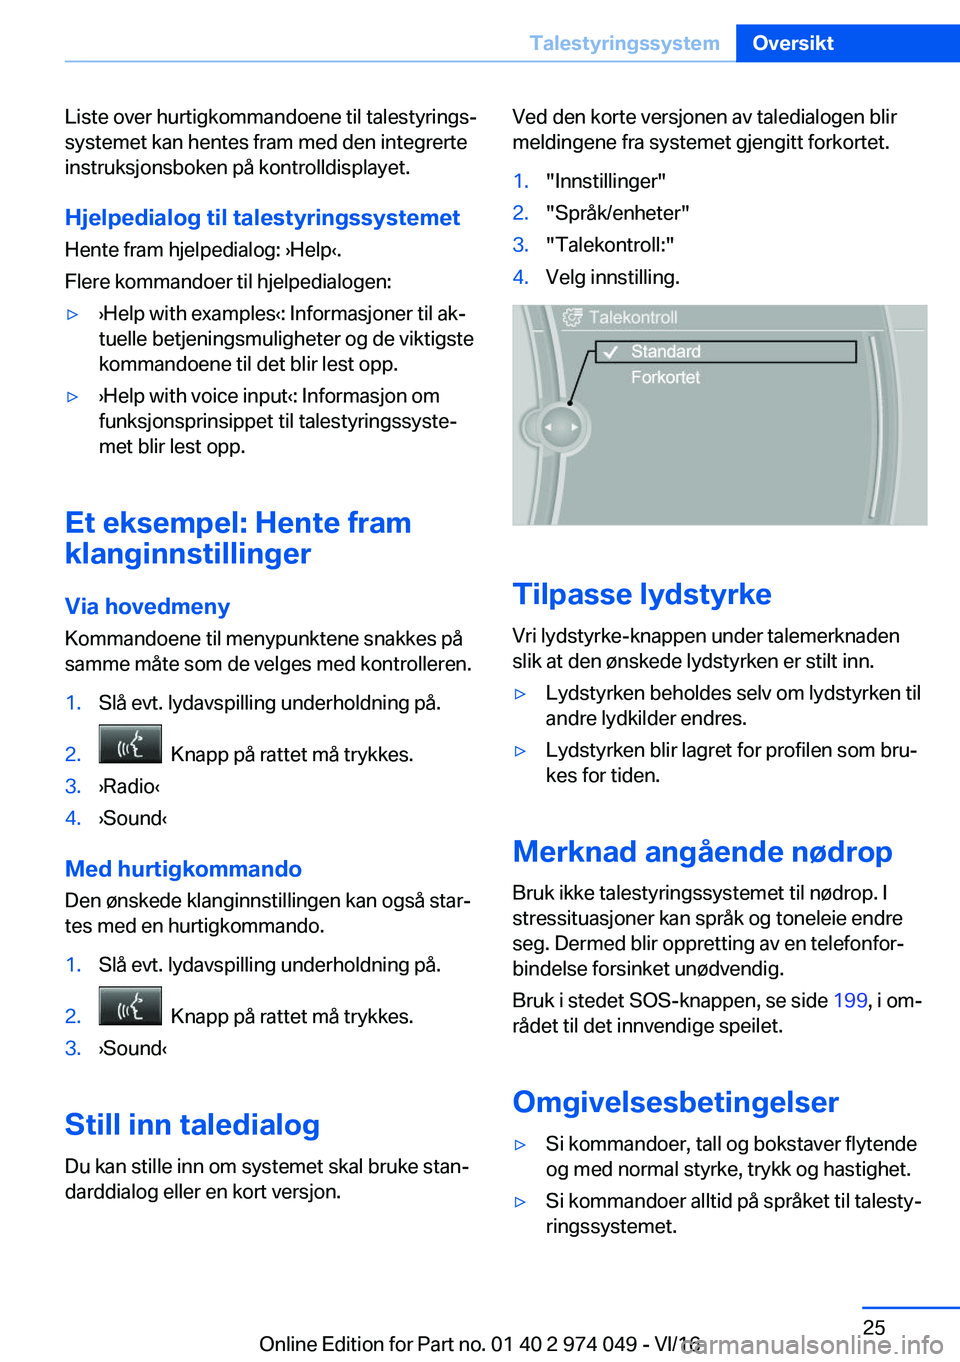 BMW M3 2017  Instructieboekjes (in Dutch) �L�i�s�t�e� �o�v�e�r� �h�u�r�t�i�g�k�o�m�m�a�n�d�o�e�n�e� �t�i�l� �t�a�l�e�s�t�y�r�i�n�g�sj
�s�y�s�t�e�m�e�t� �k�a�n� �h�e�n�t�e�s� �f�r�a�m� �m�e�d� �d�e�n� �i�n�t�e�g�r�e�r�t�e �i�n�s�t�r�u�k�s�j�o